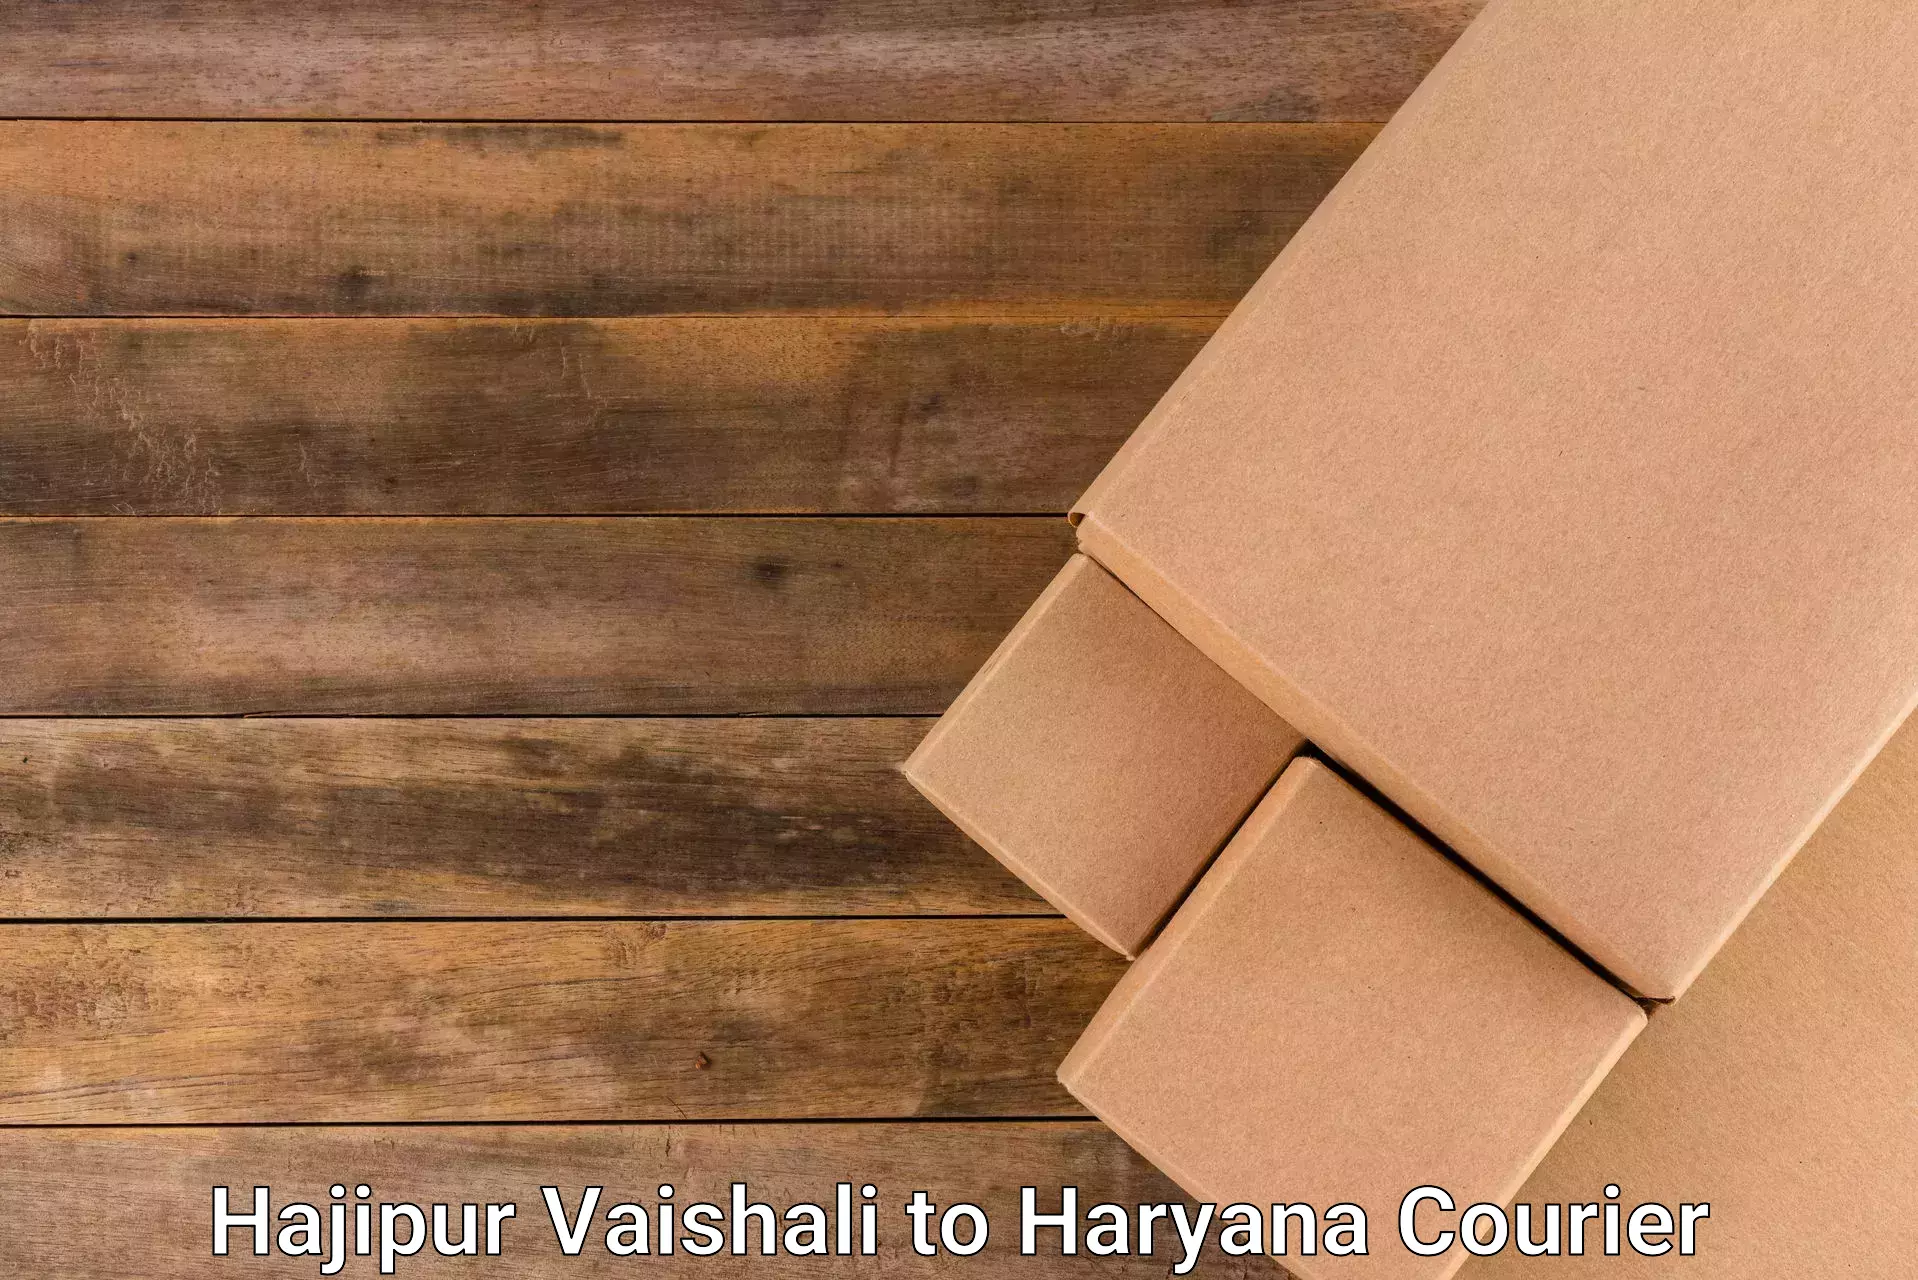 Cargo delivery service Hajipur Vaishali to Panipat